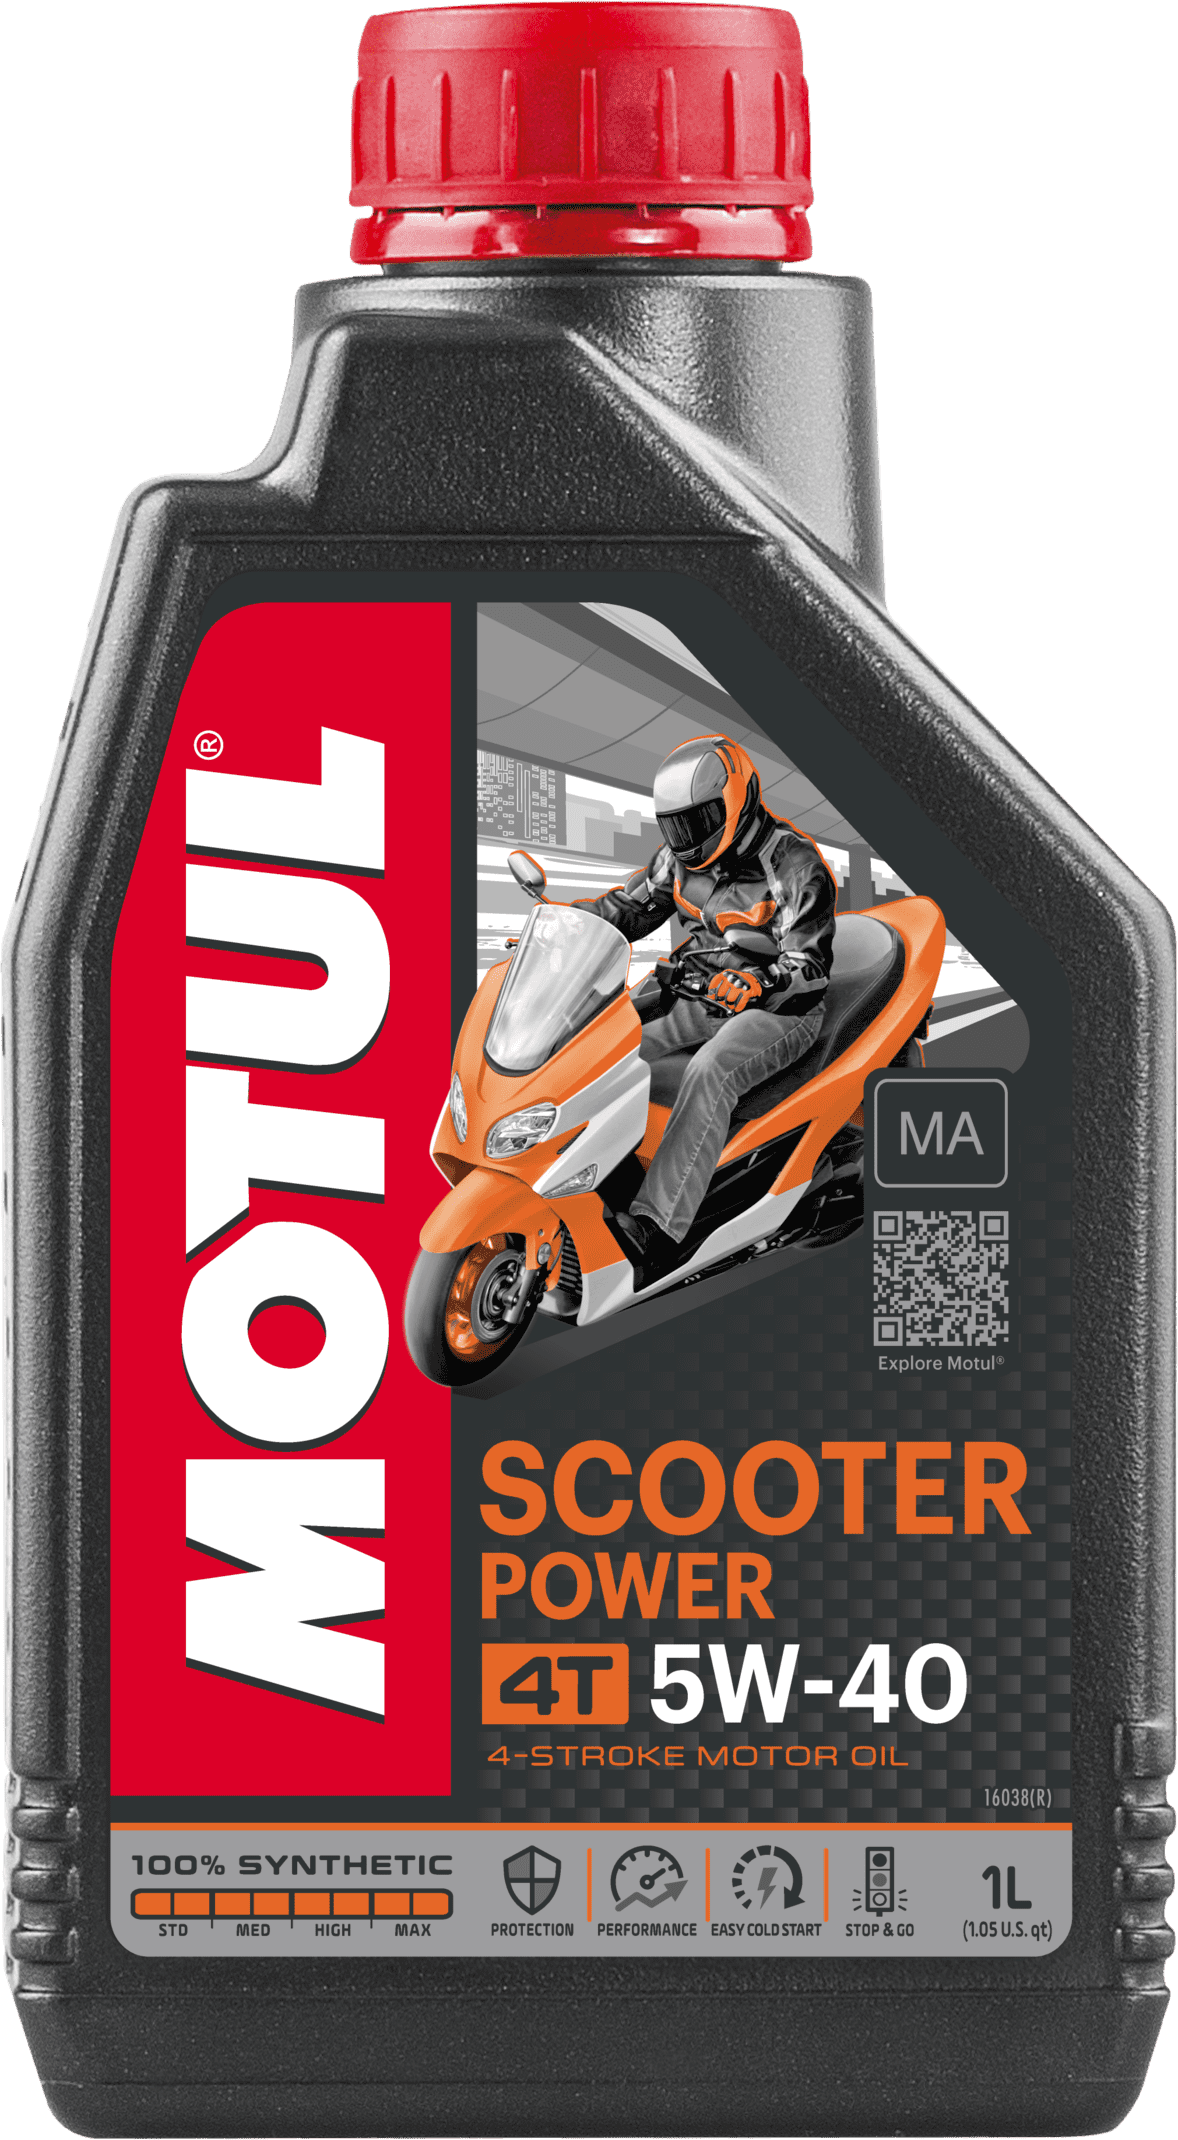 Motul Scooter Power 4T 5W-40 MA, 1 lt